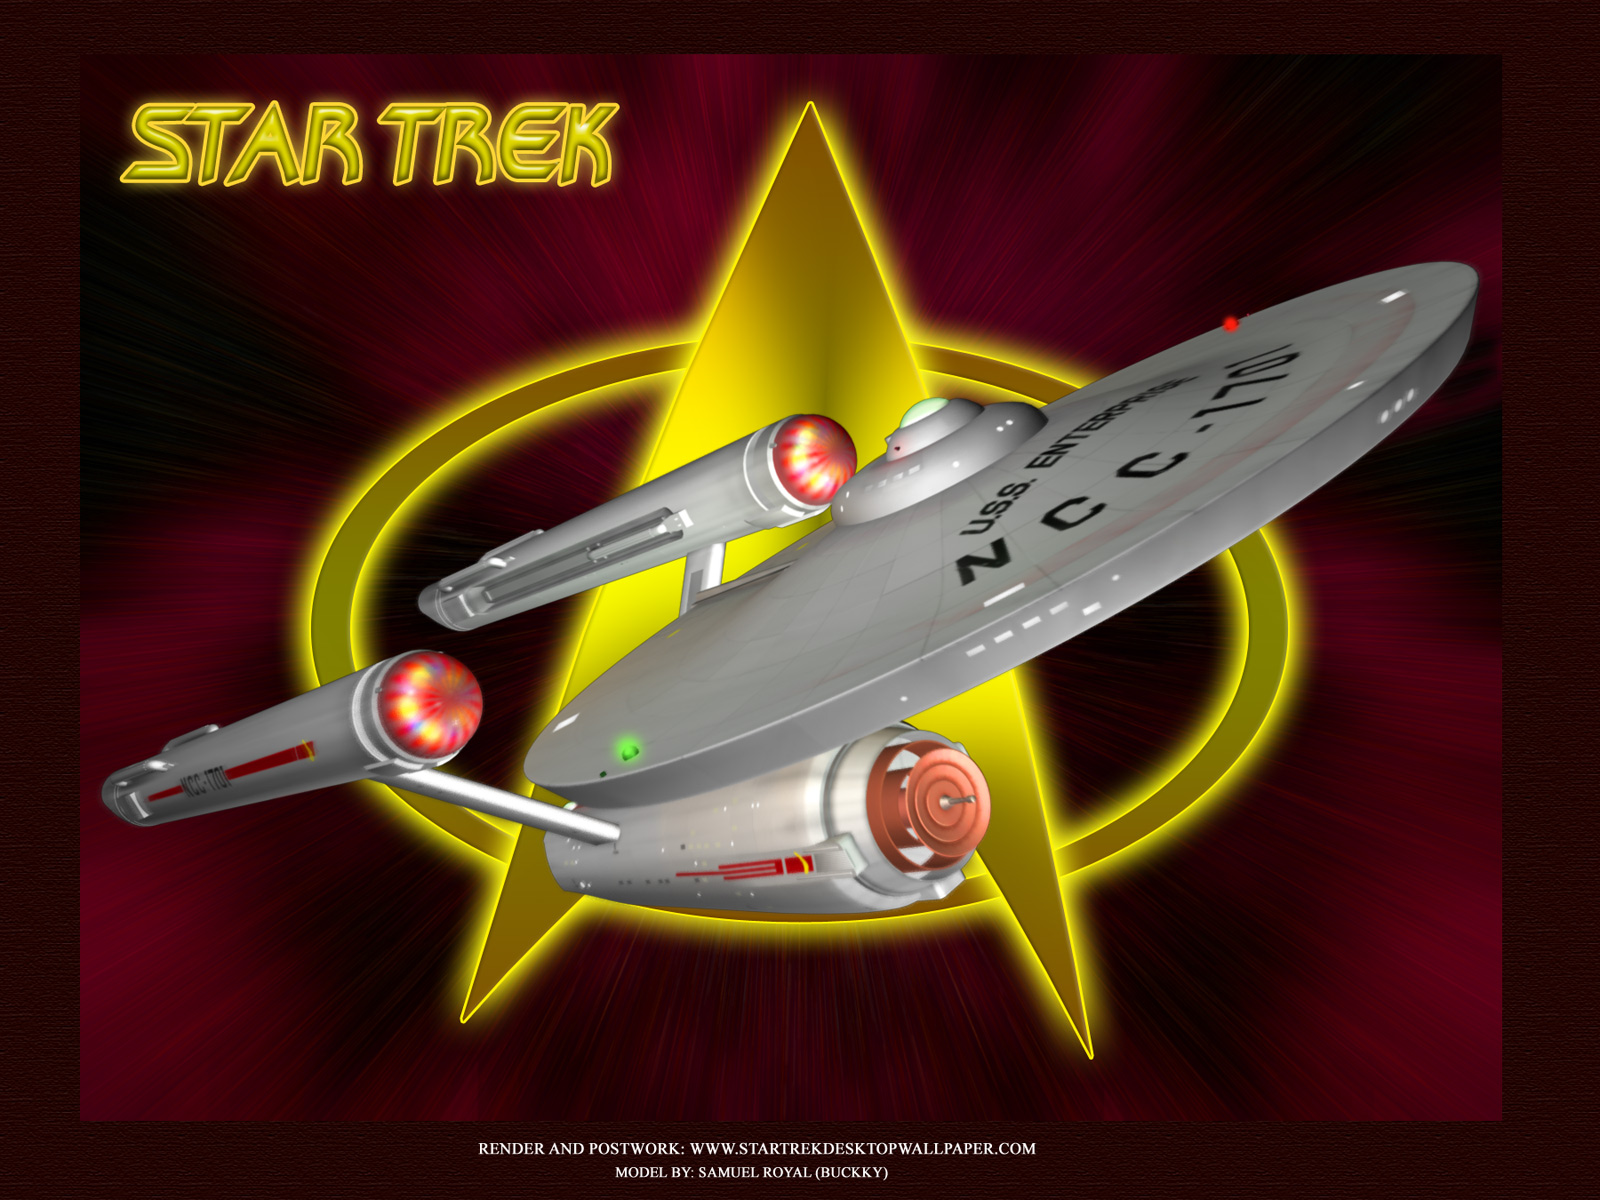 Star Trek Original Series, free Star Trek computer desktop wallpaper